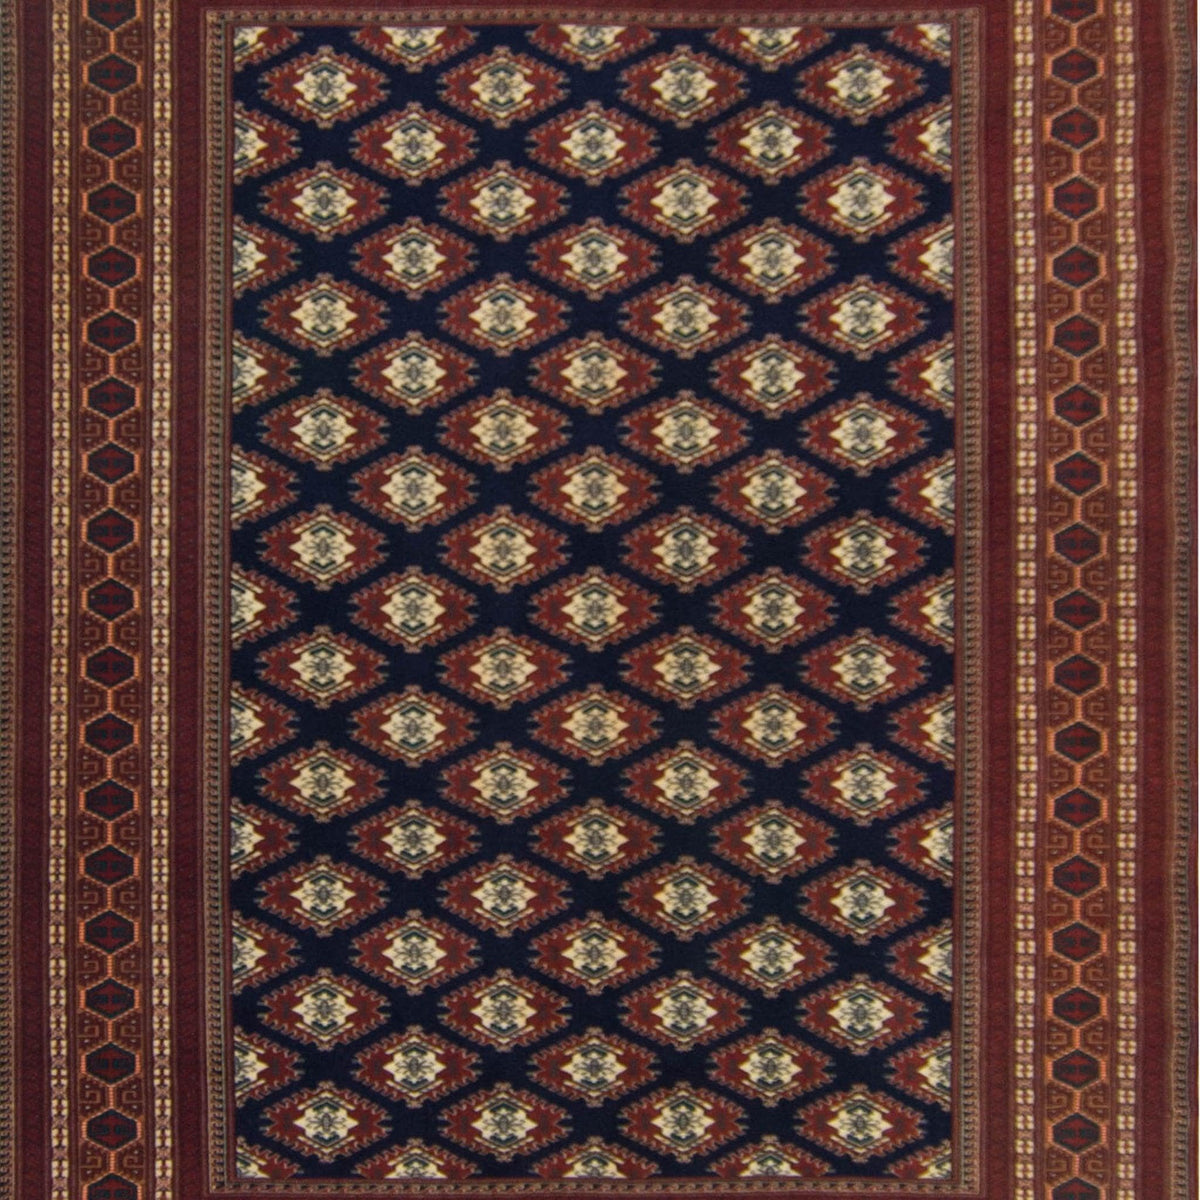 Super Fine Hand-knotted 100% Wool Persian Turkmen Rug 206cm X 297cm